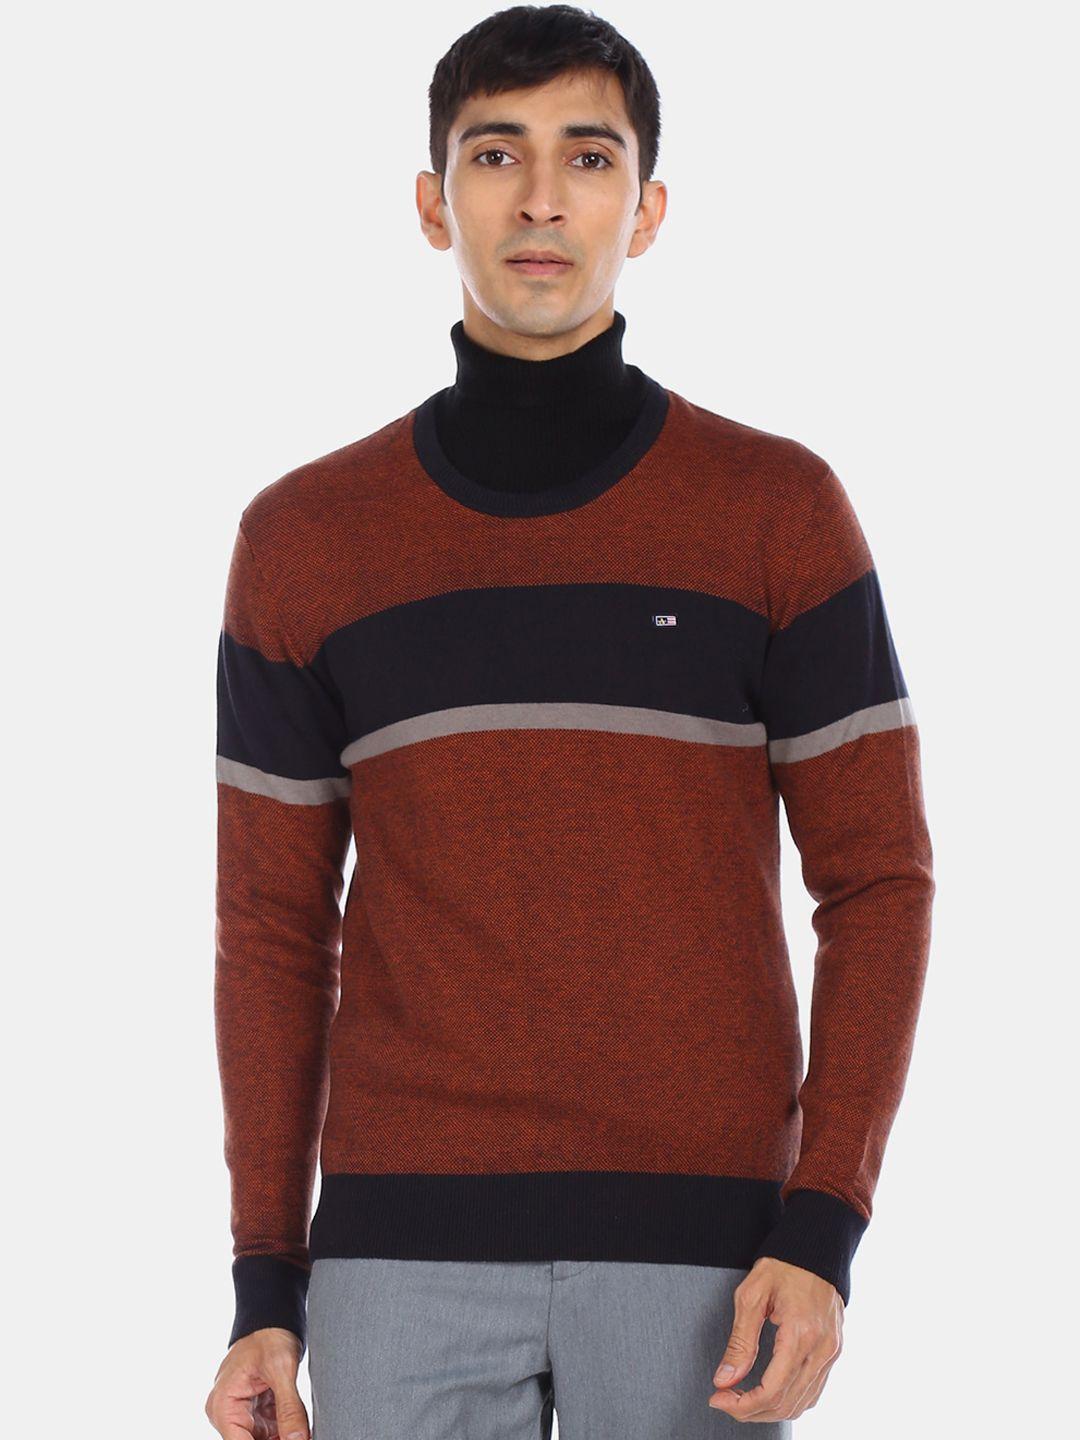 arrow-sport-men-brown-&-navy-blue-colourblocked-pullover-sweater